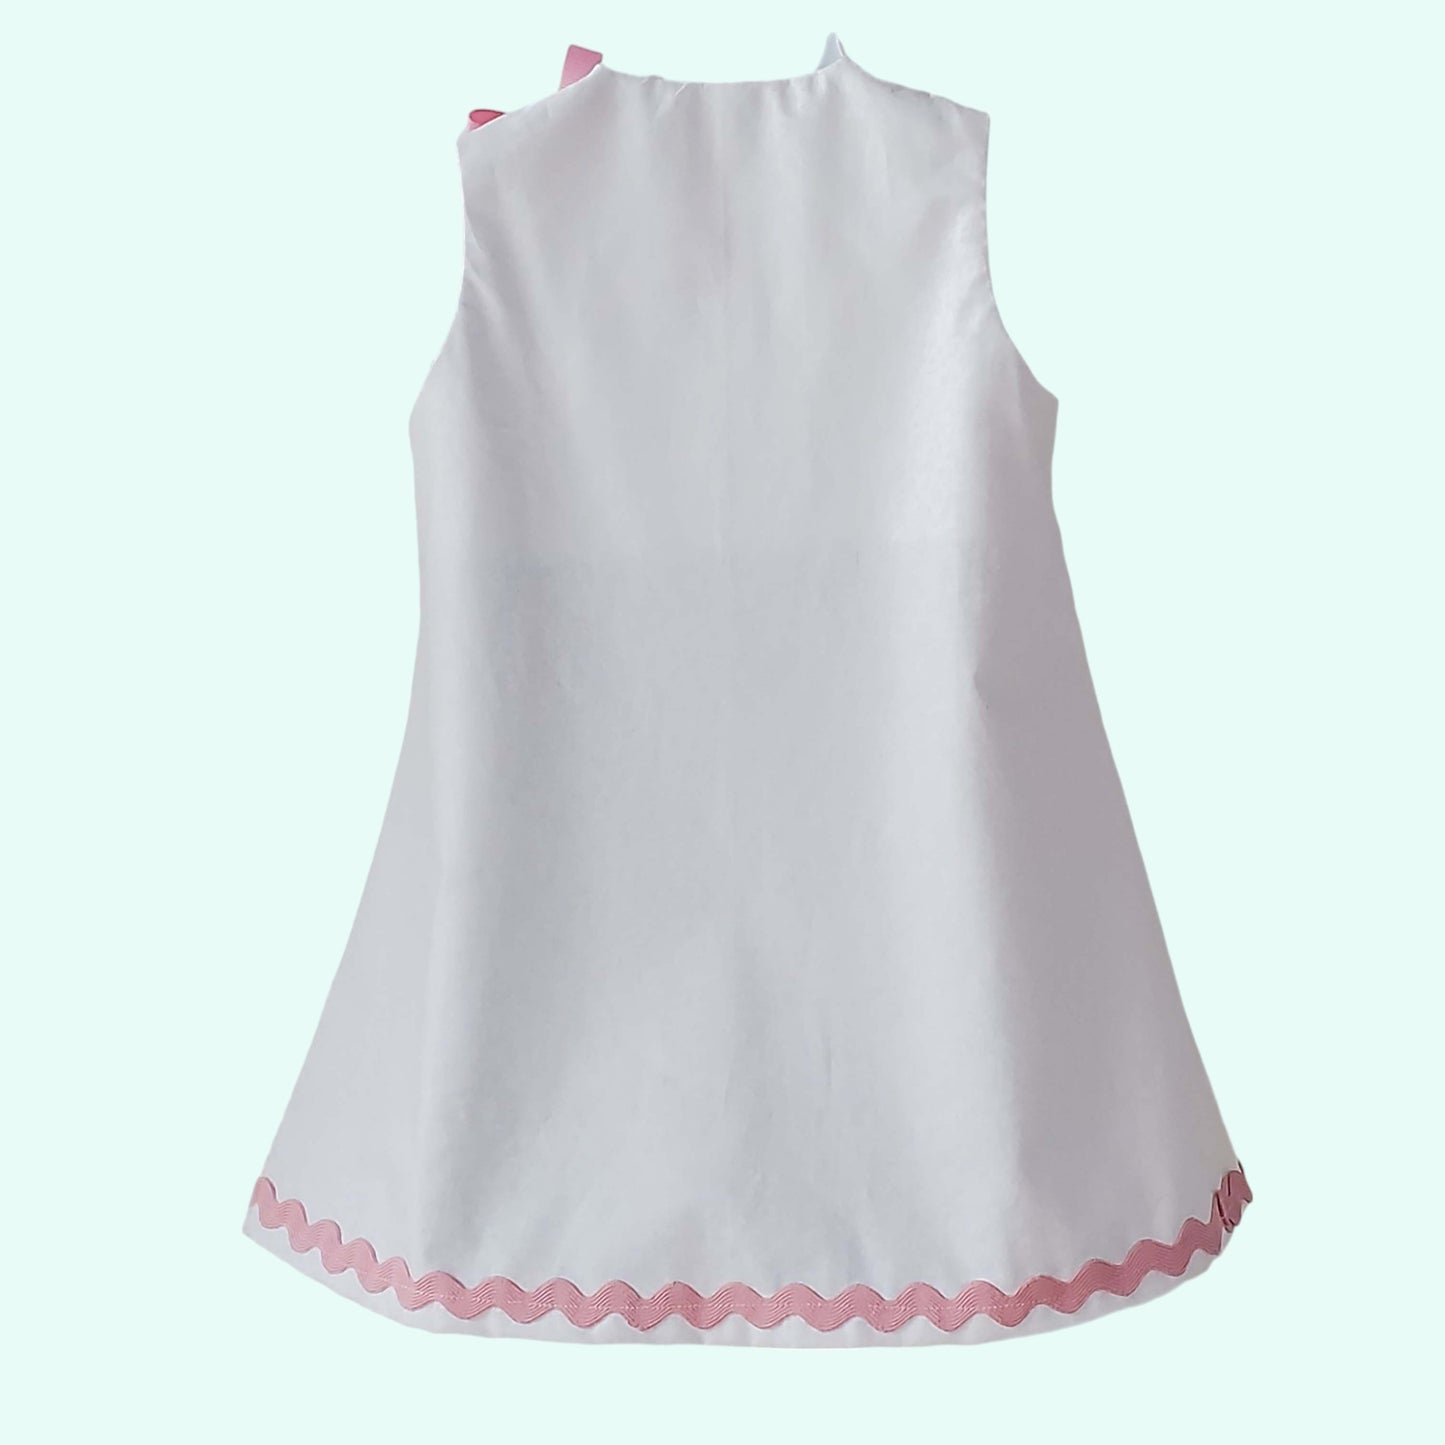 Monogram Girls Dress | Birthday Dress | Girls Dress |  Personalized Baby Dress |  Personalized Jumper Girls Dress